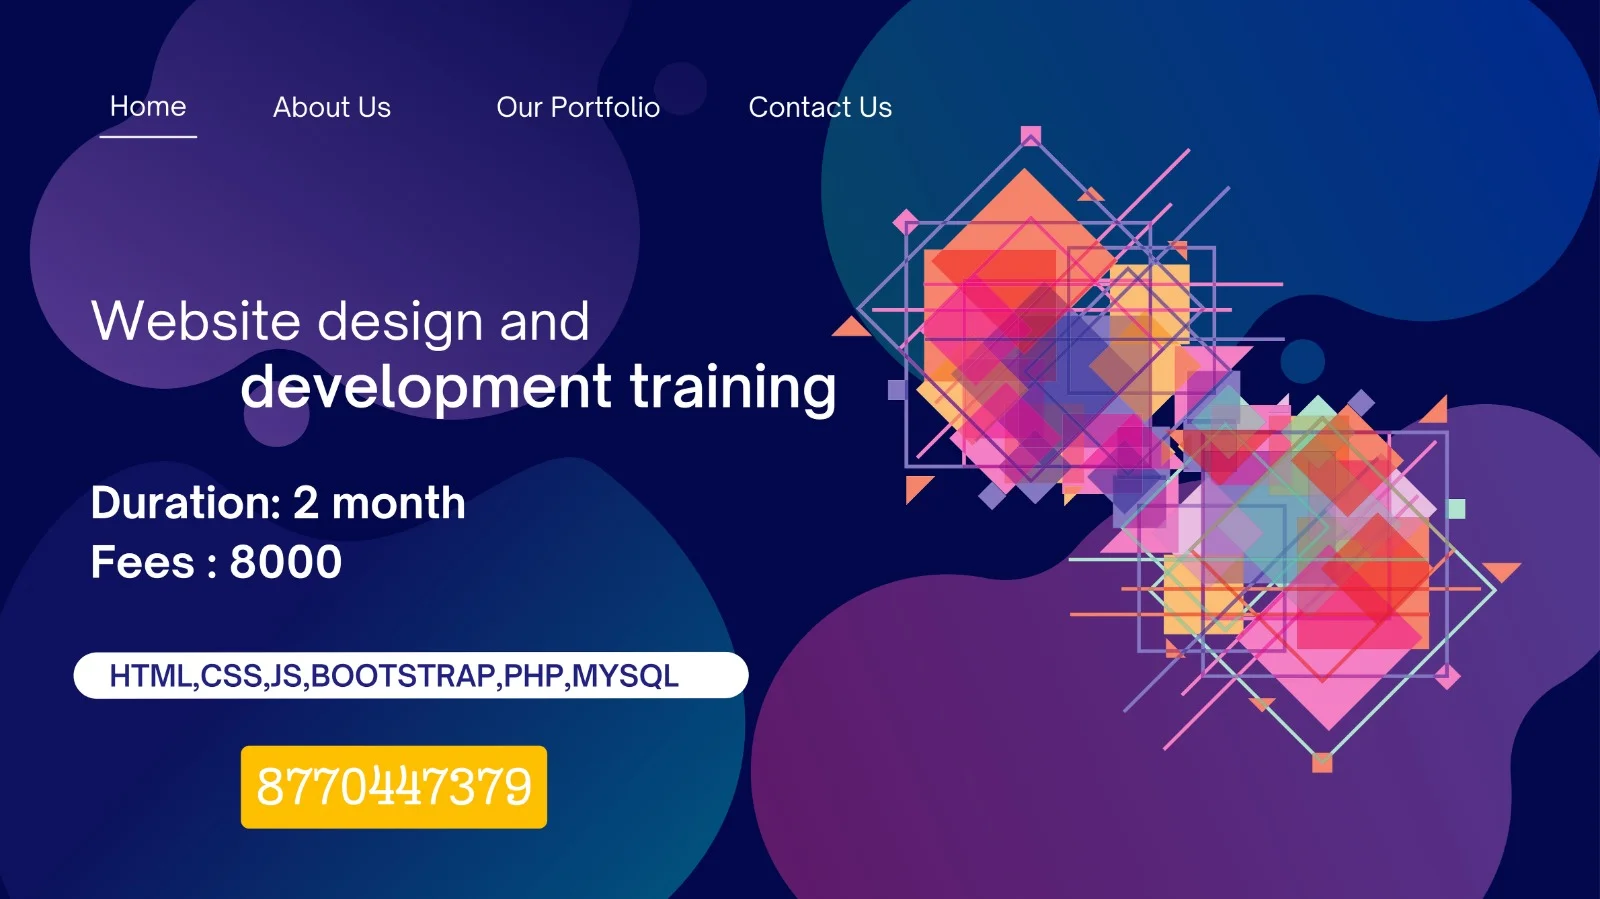 Website Design and development training by Param S